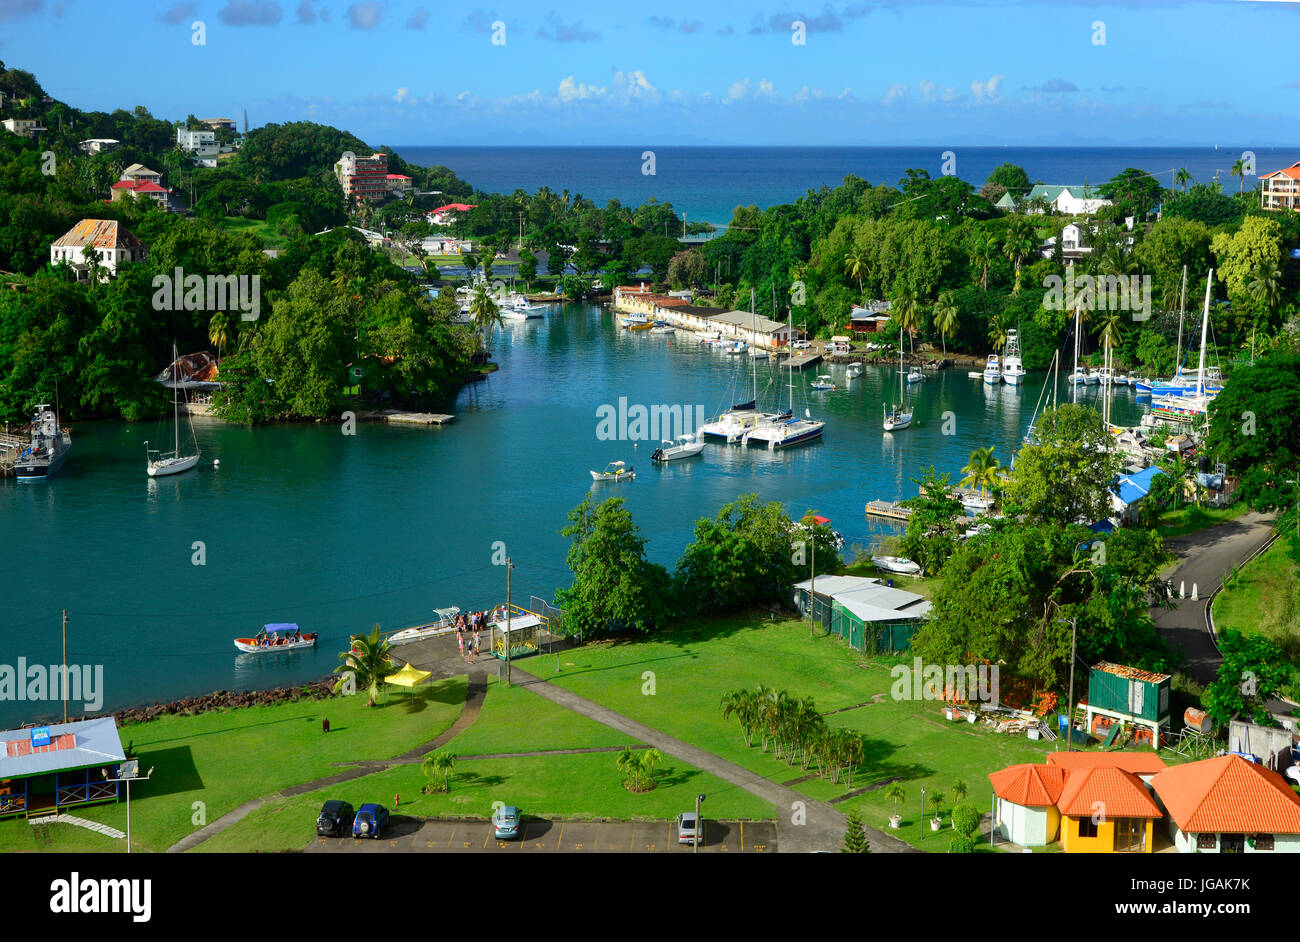 Bathsheba Bridgetown Barbados Southern Caribbean Cruise Celebrity cruise line Stock Photo